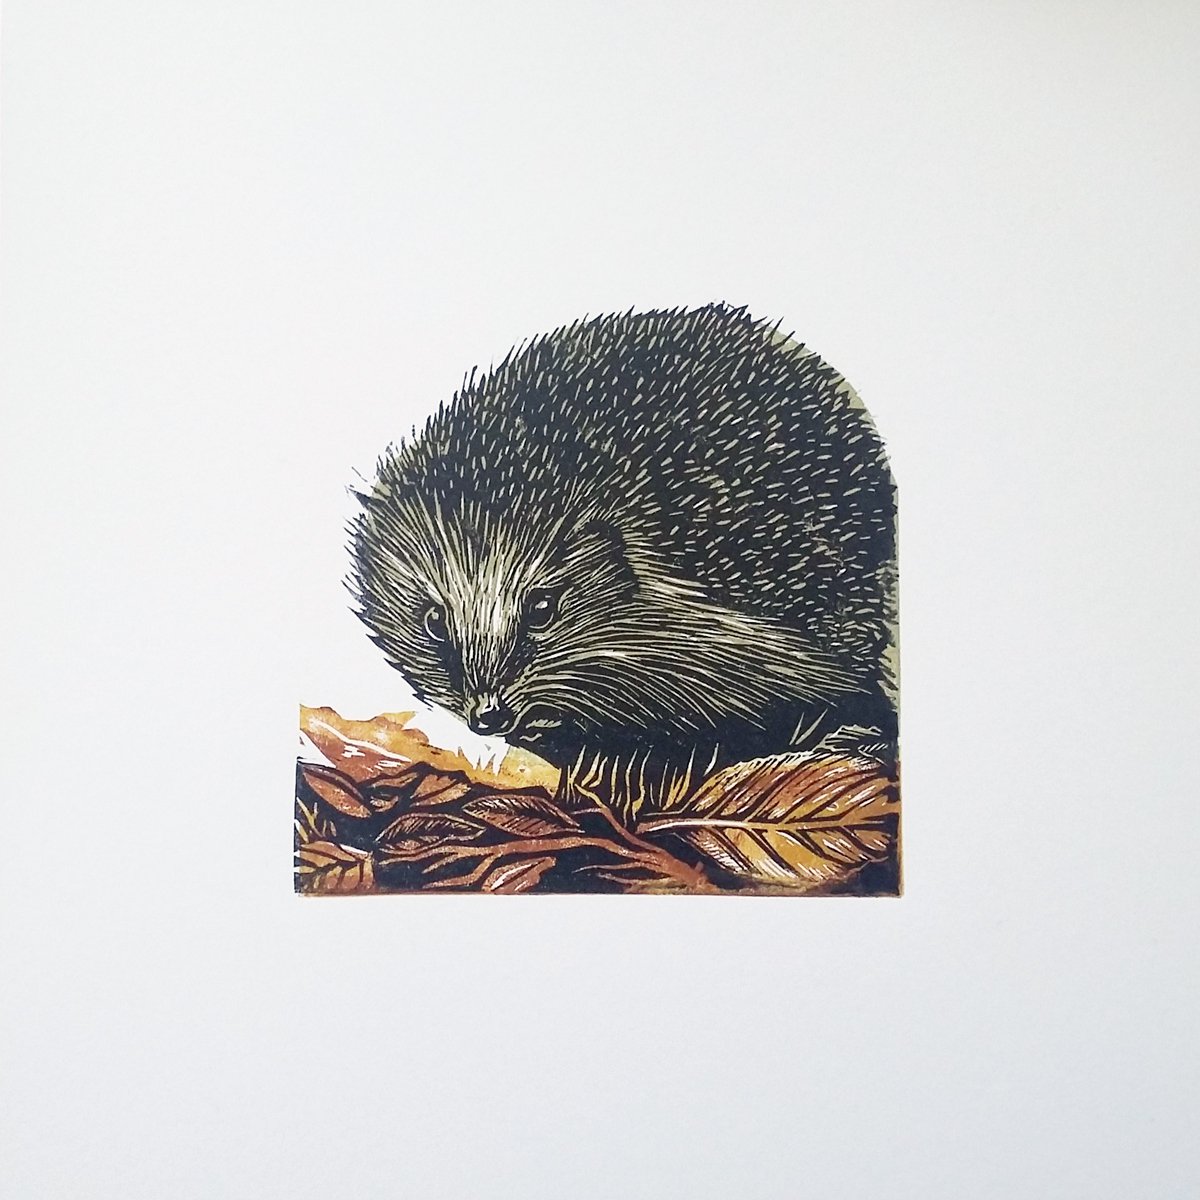 Hedgehog - linocut print by Carolynne Coulson